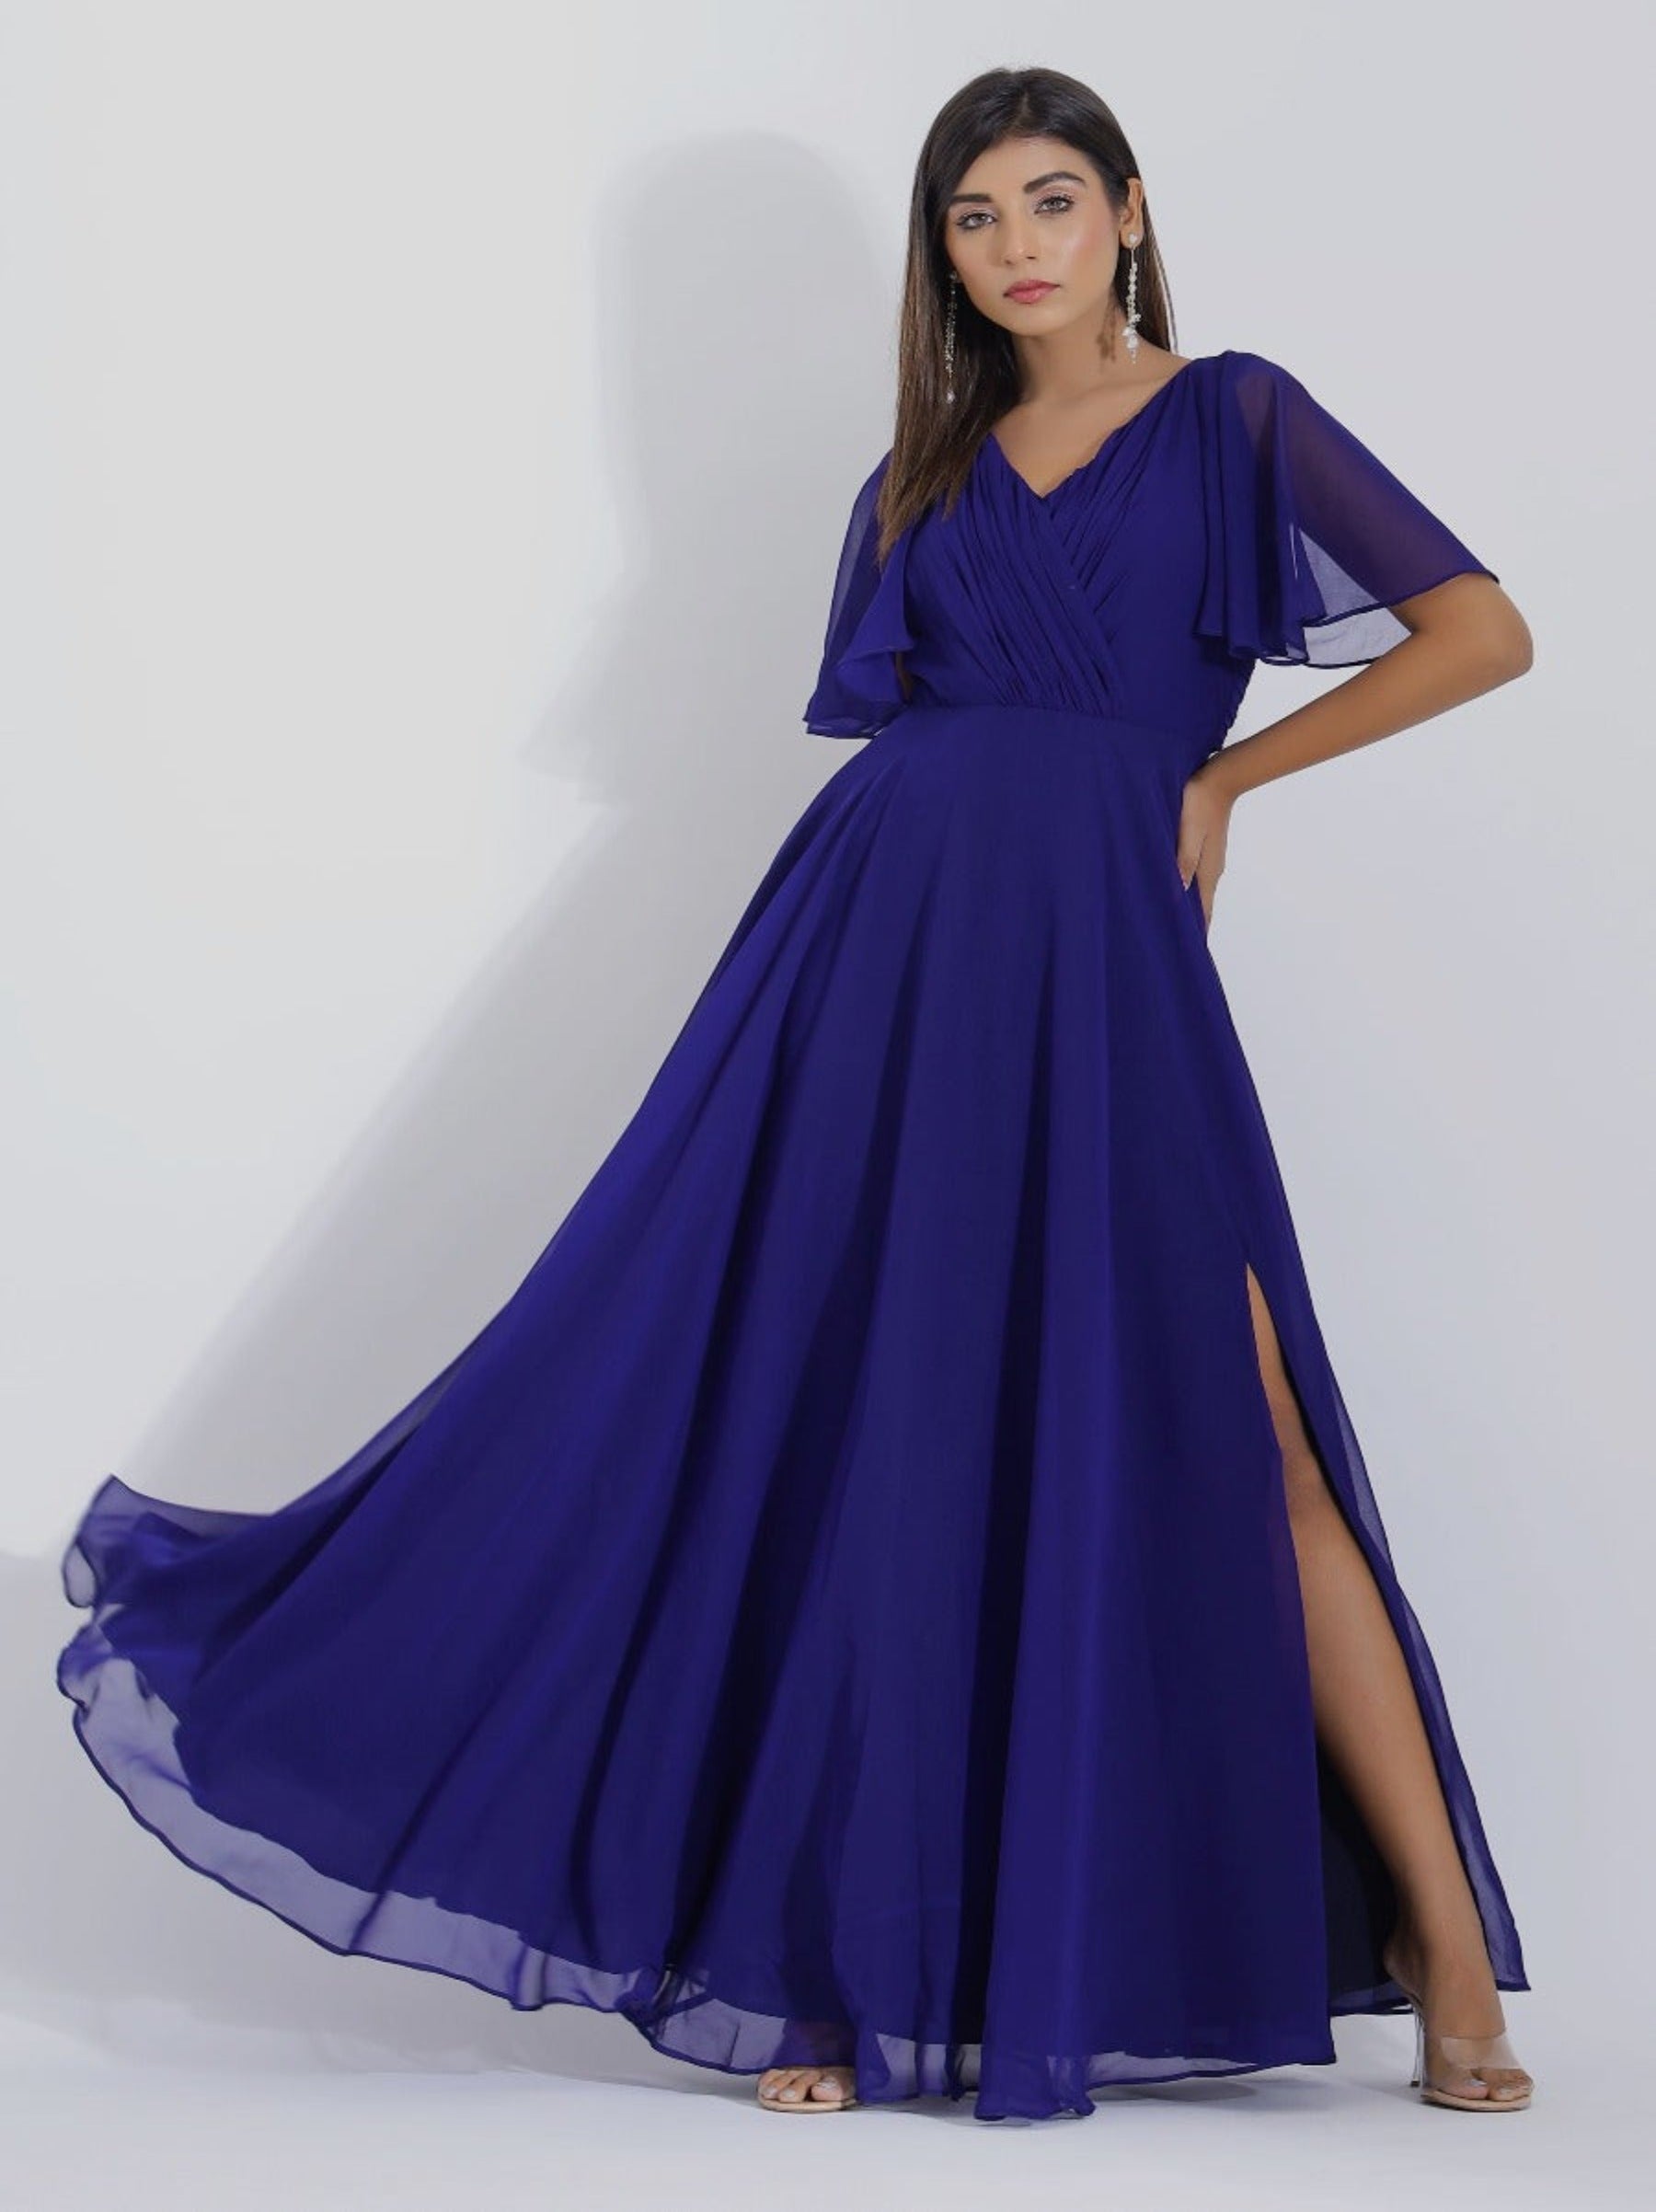 Blue Evening Gown